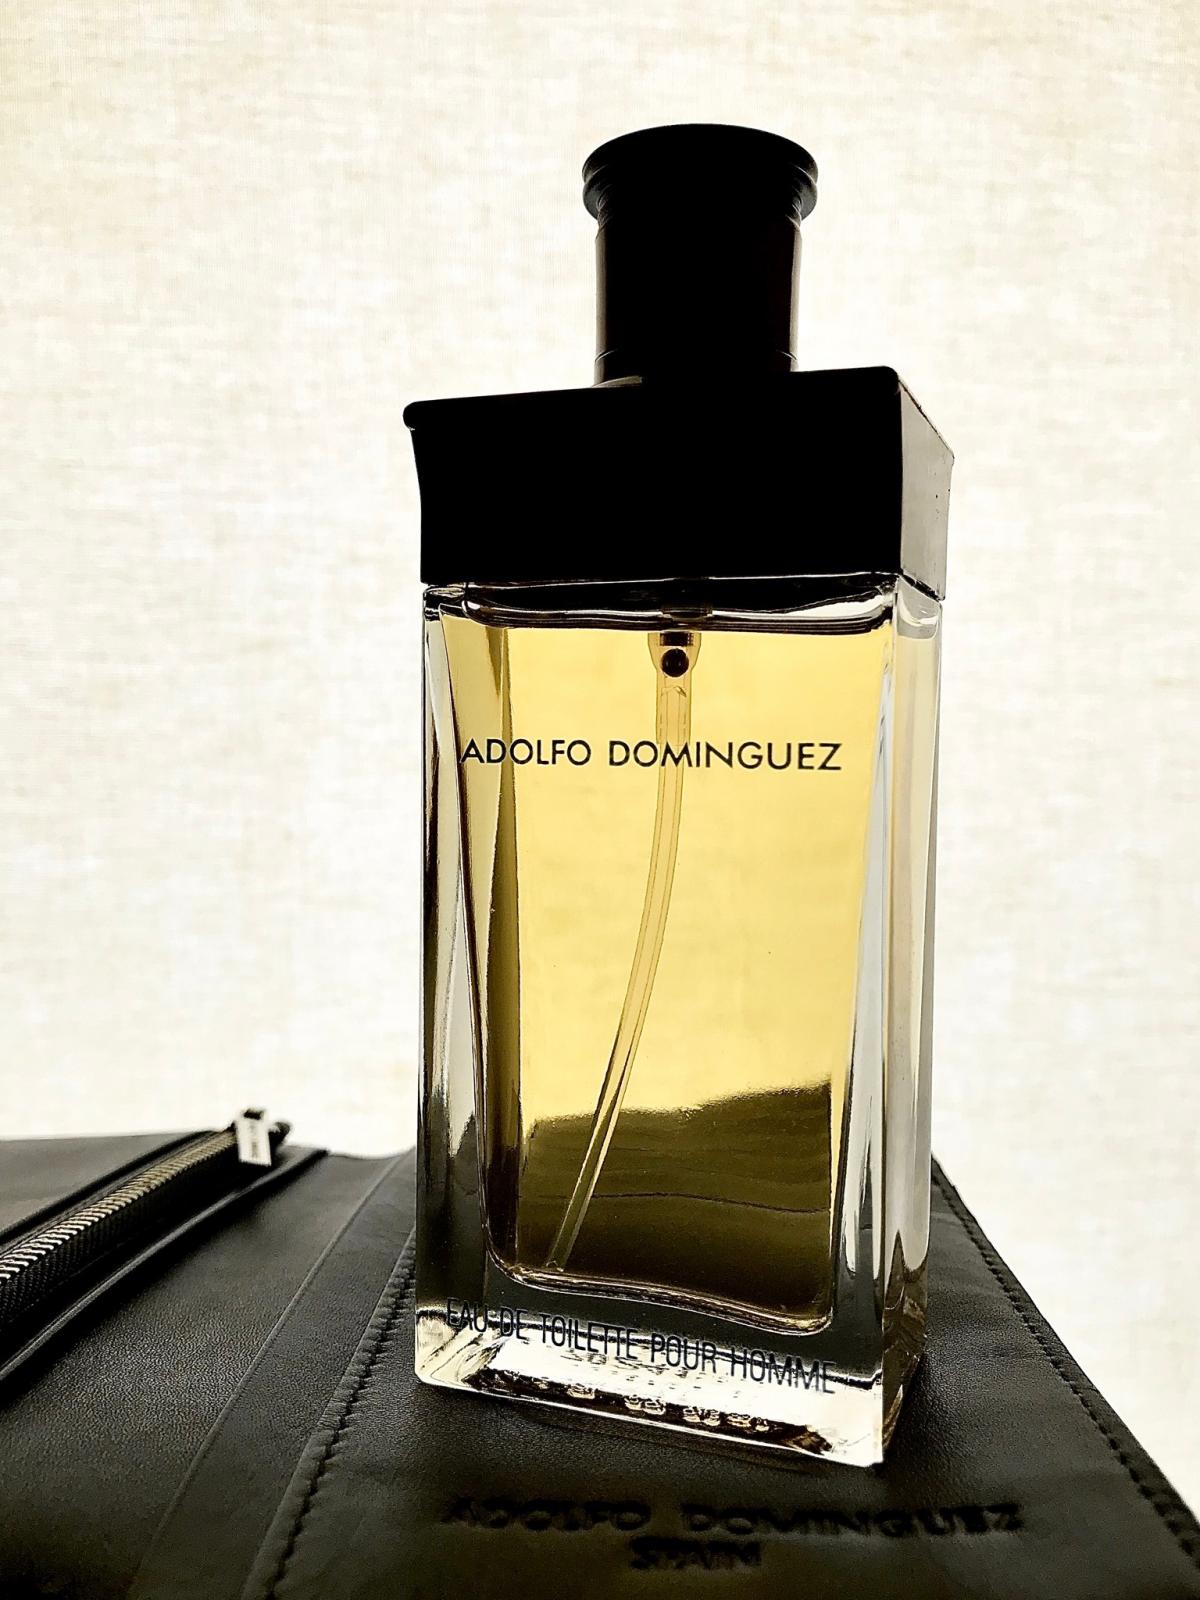 Adolfo Dominguez Adolfo Dominguez cologne - a fragrance for men 1990